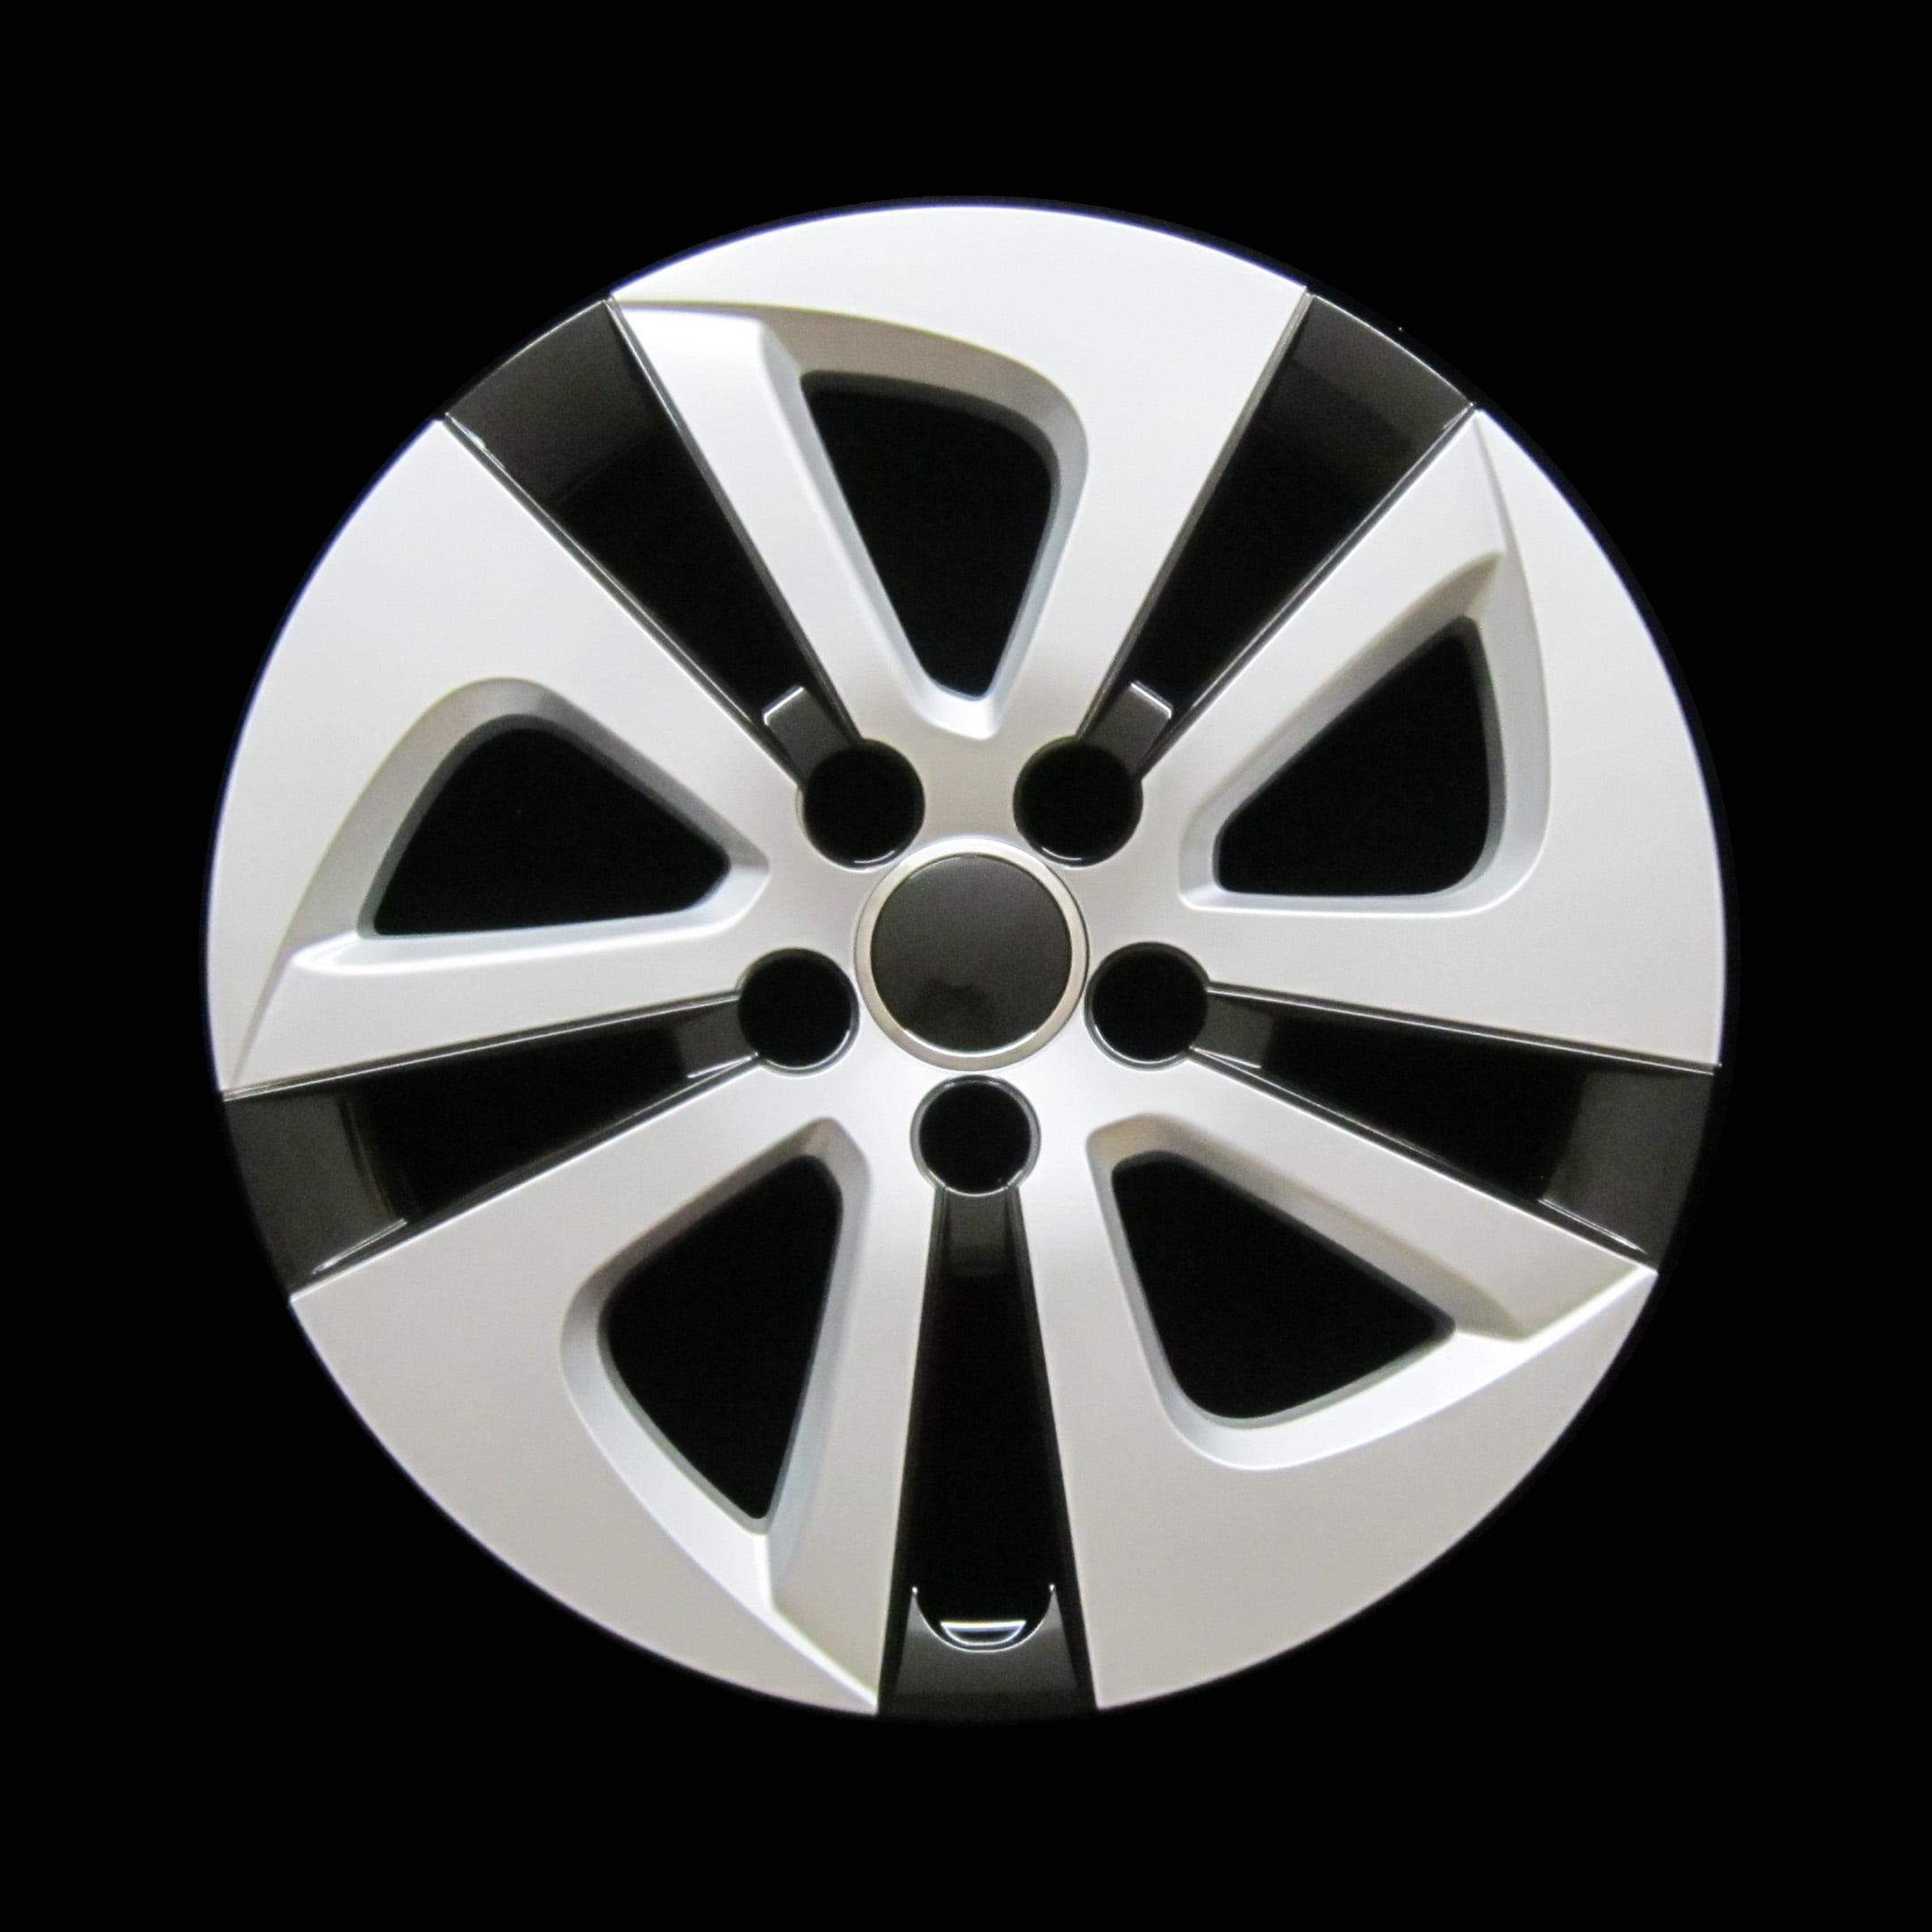 Set of 4 New 2012-2016 Toyota Prius C 15" Wheel Covers Hub Caps Full Rim Skins 